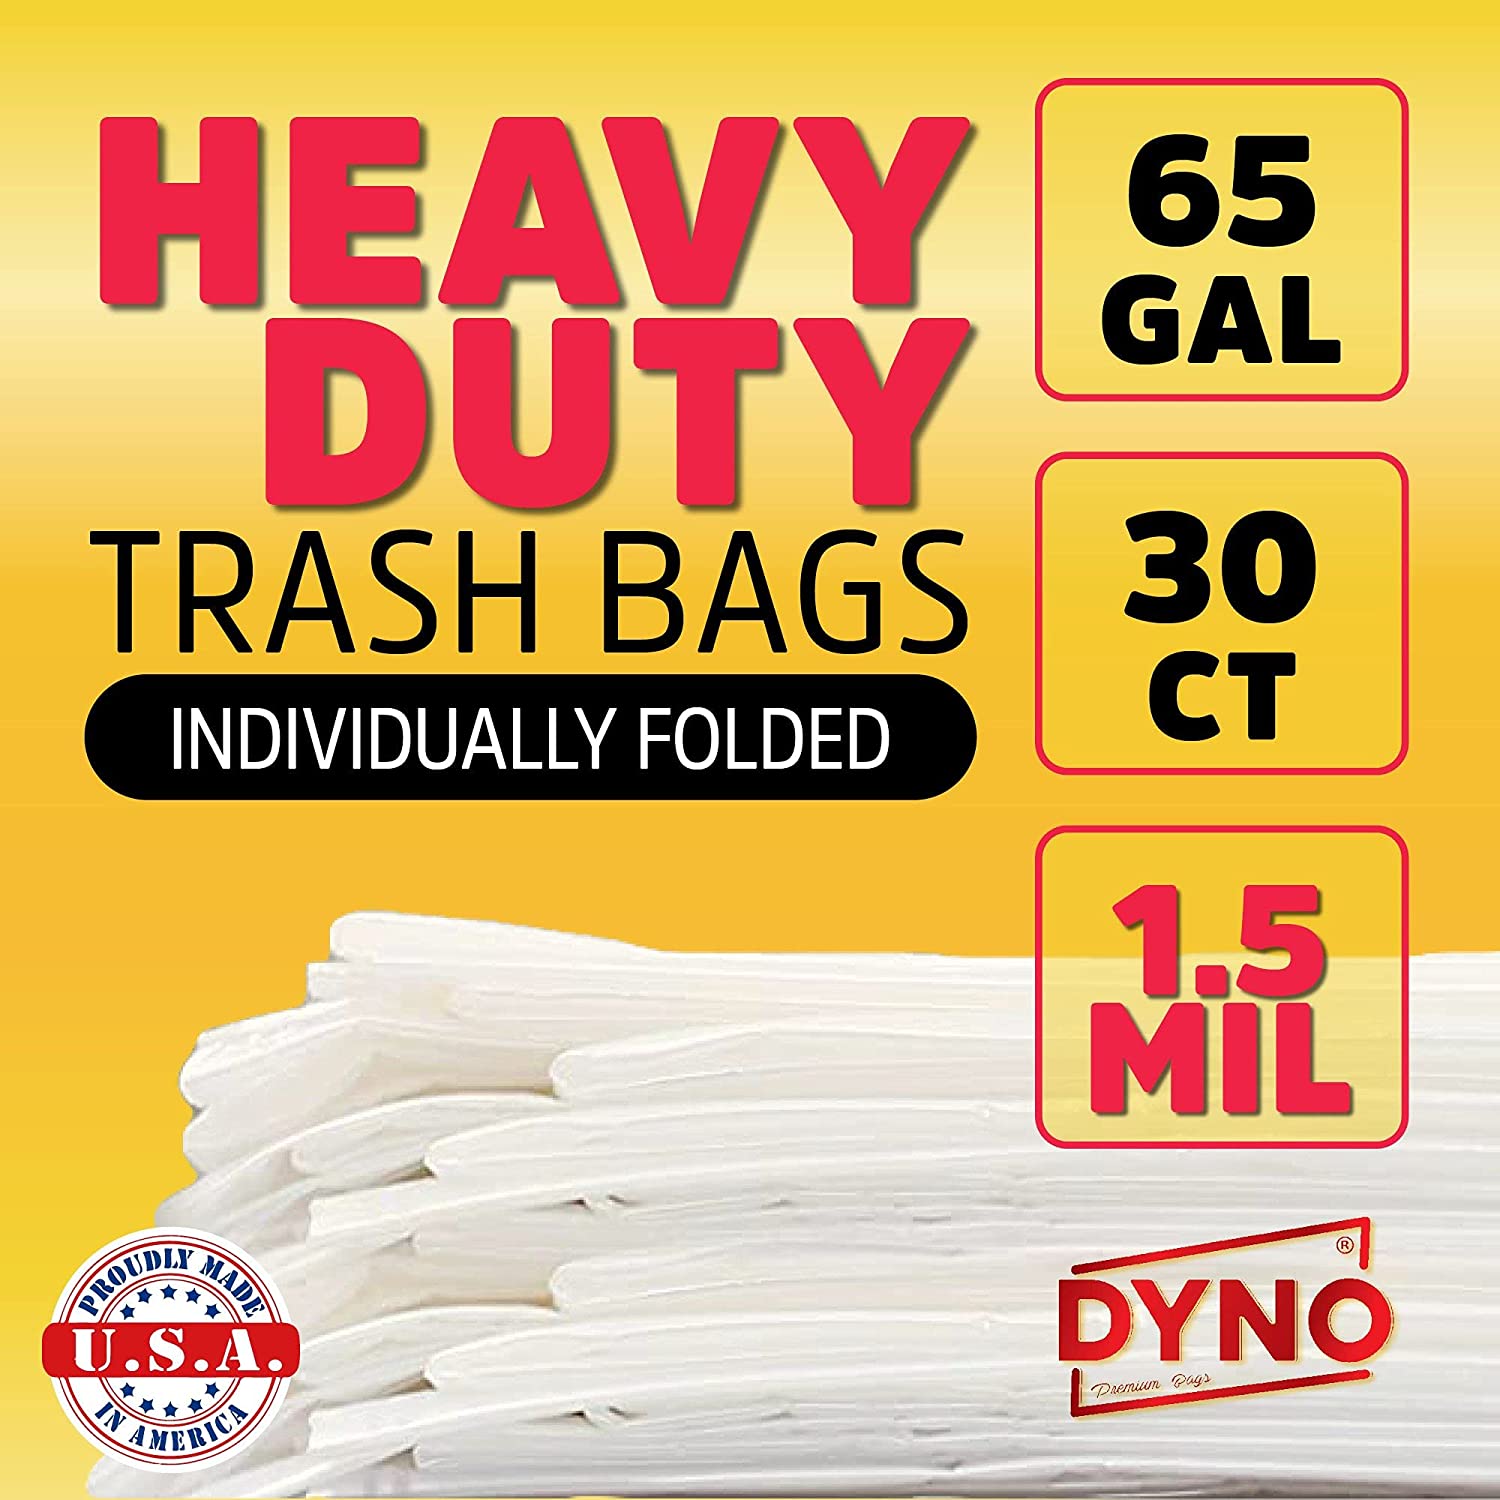 Large Clear Trash Bags - 65 Gallon Clear Trash Bags